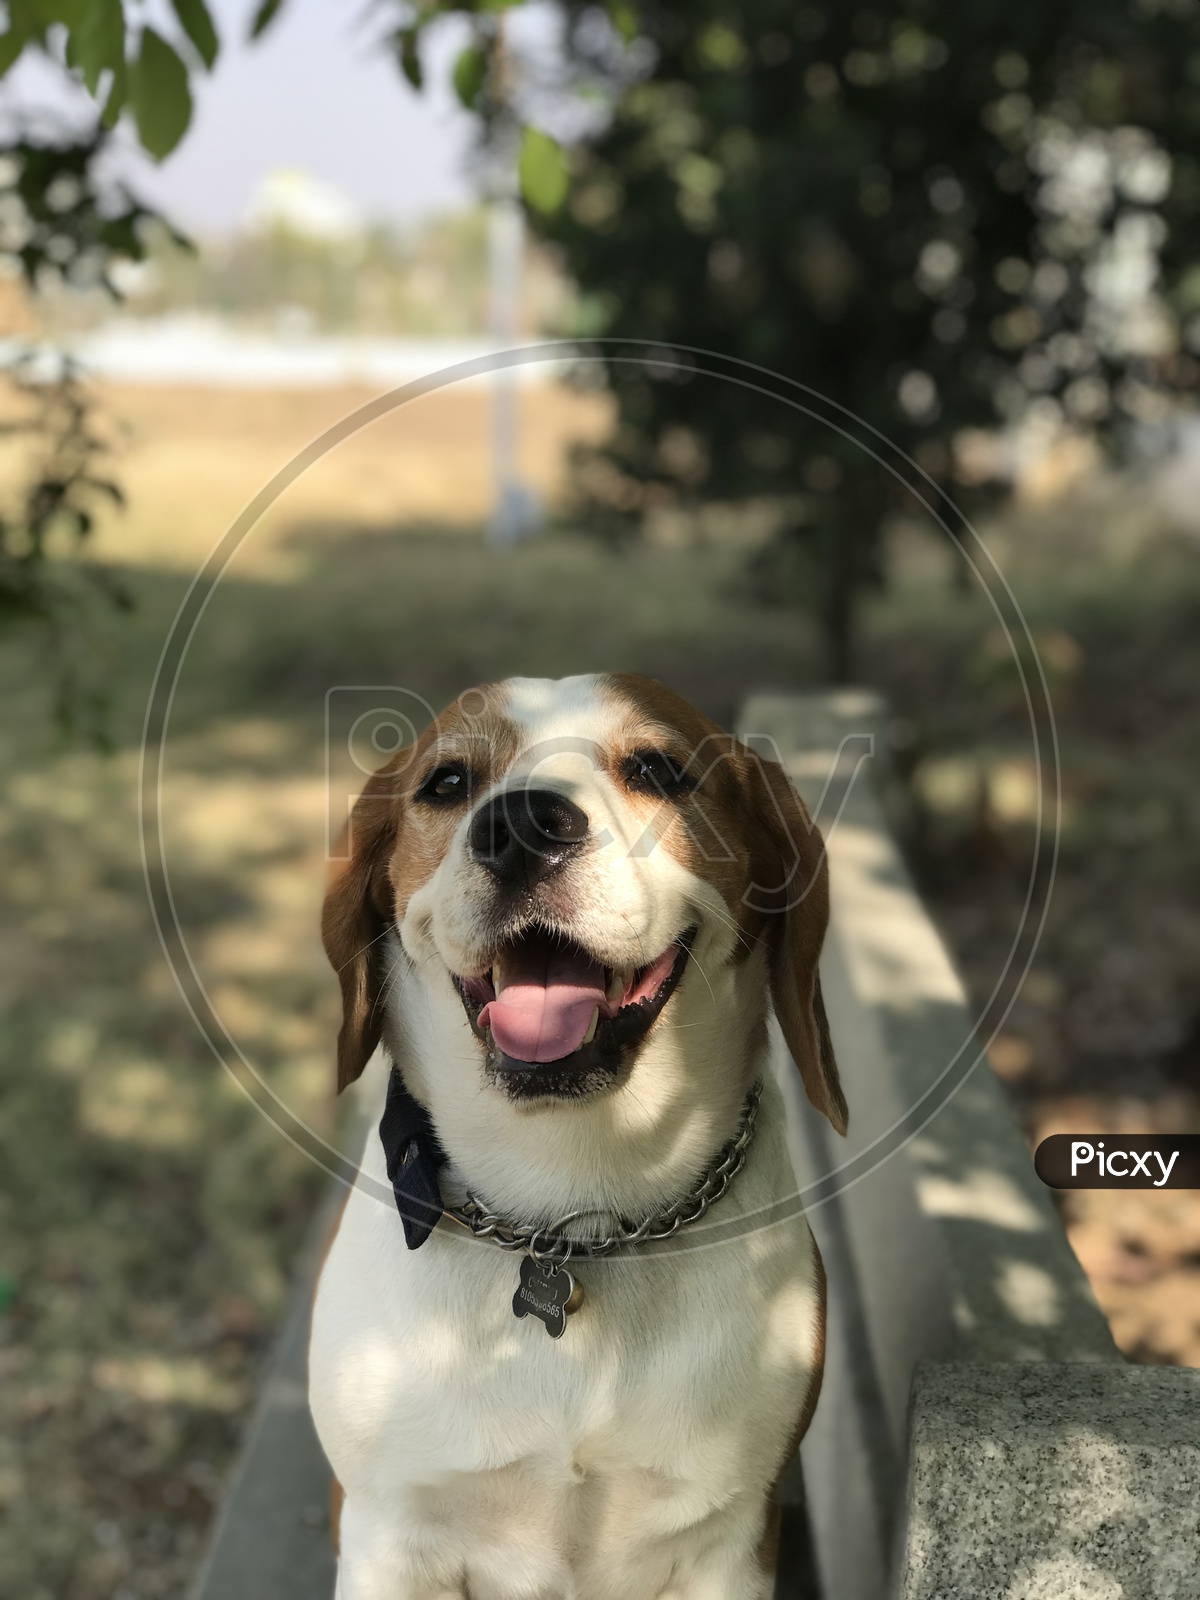 Cute beagle dog in the garden smiling